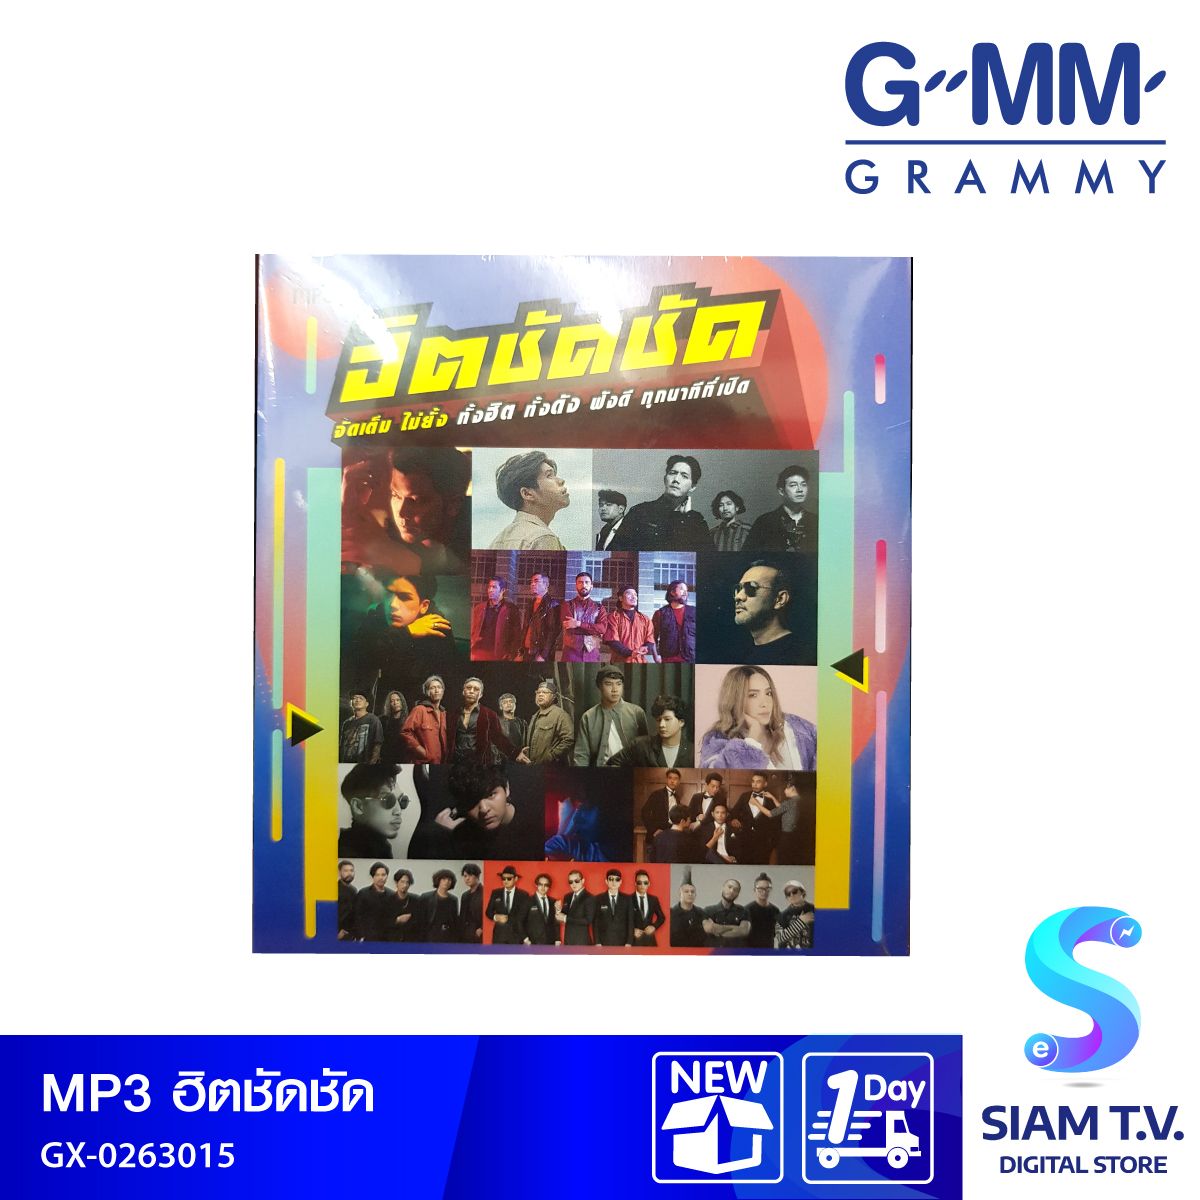 GMM GRAMMY  MP3 ฮิตชัดชัด